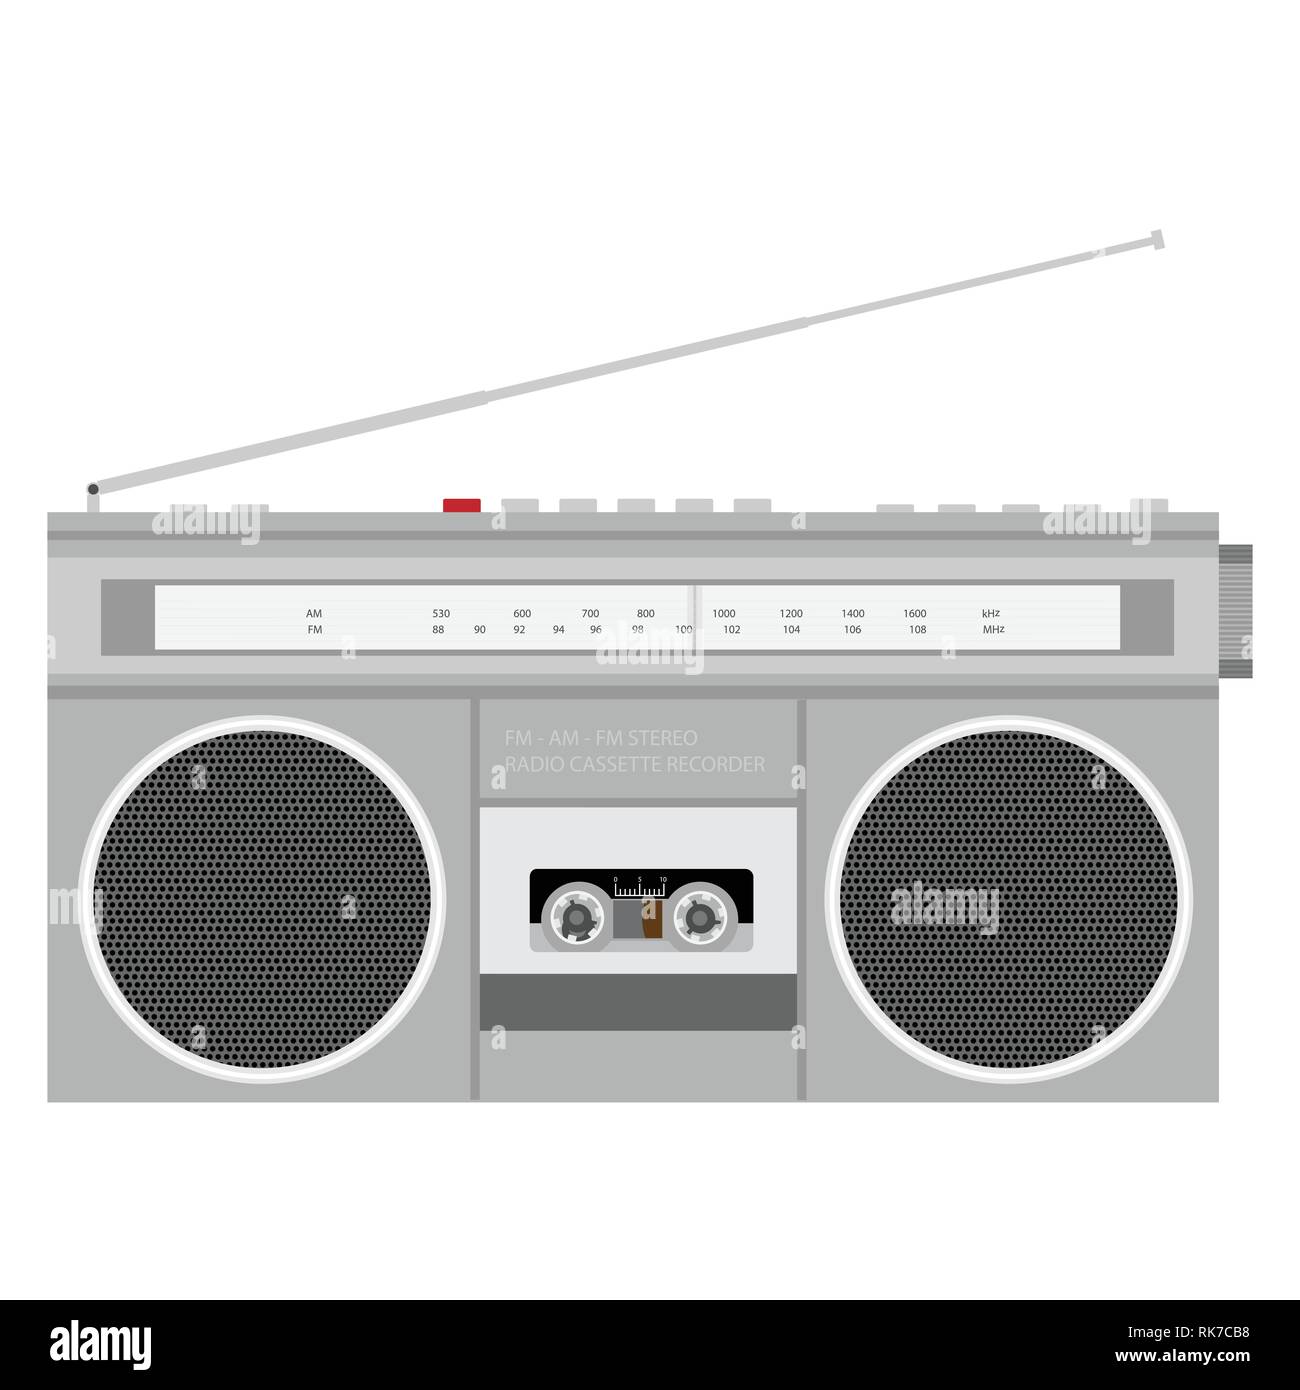 Retro veraltete Portable Stereo boombox Radiorecorder von 80s  Stock-Vektorgrafik - Alamy